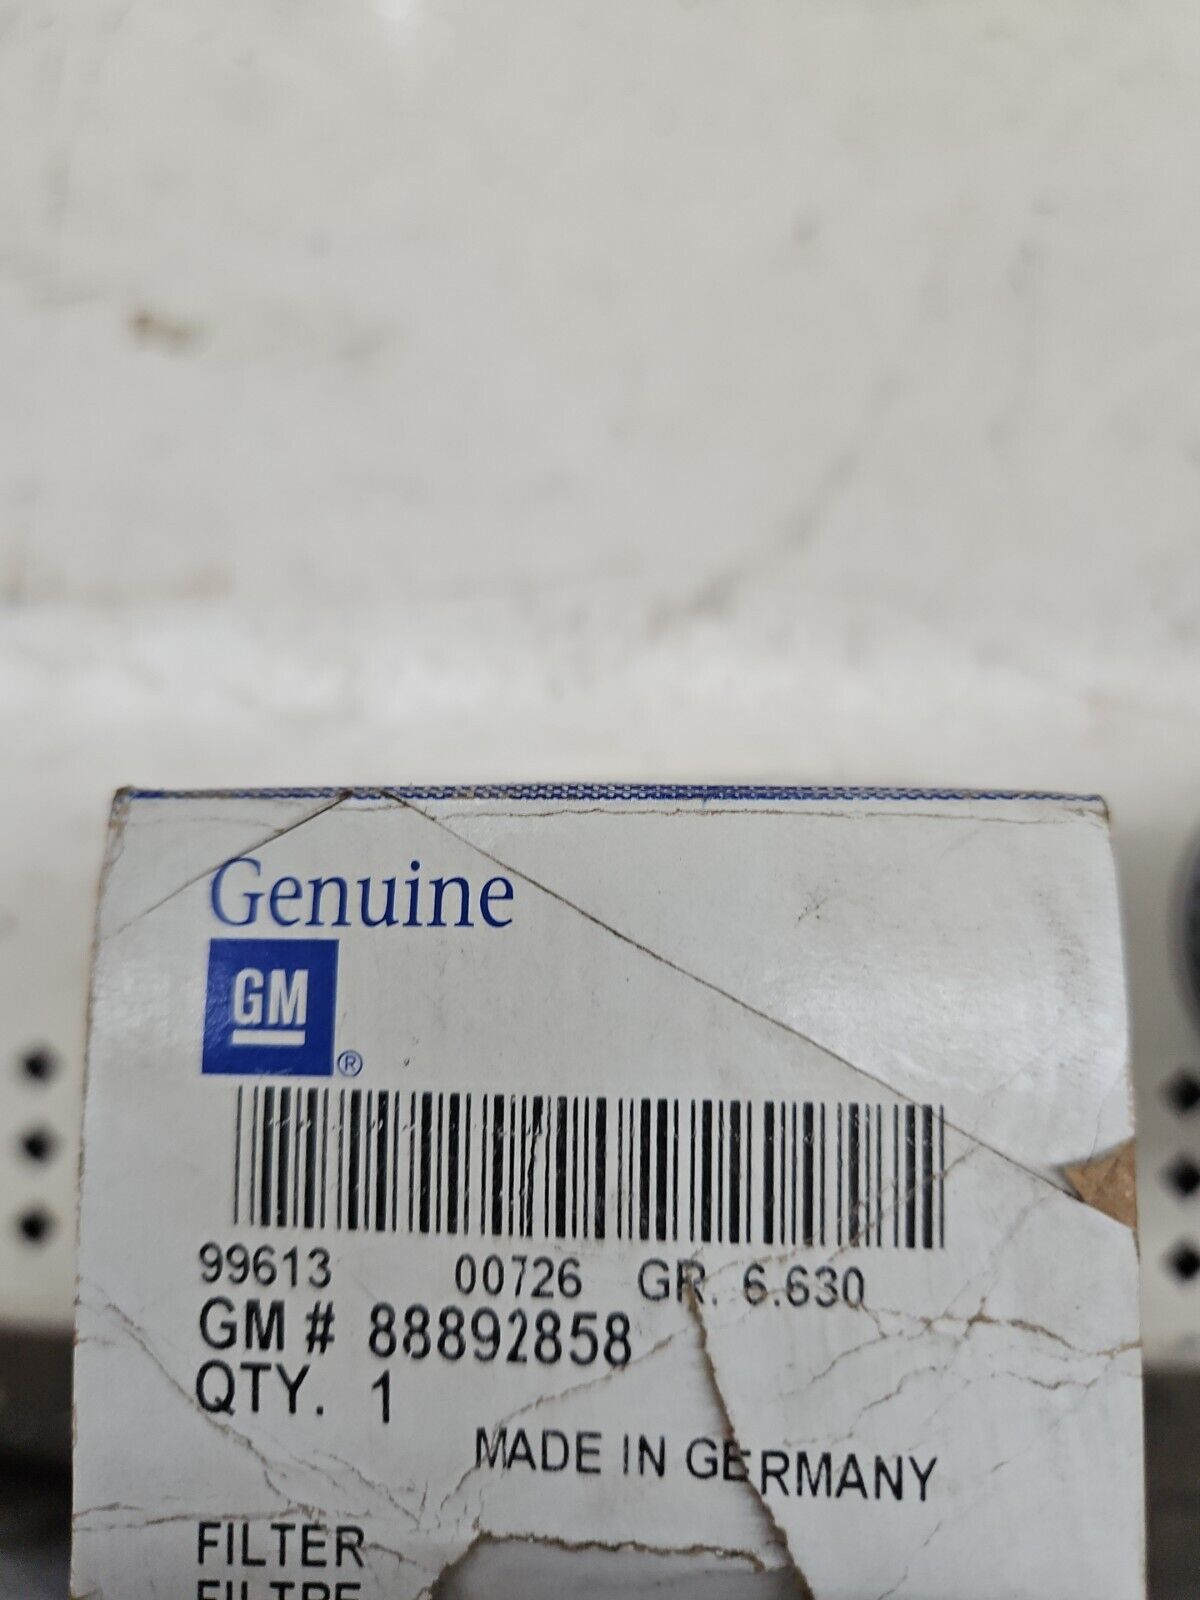 Genuine GM Filter 88892858